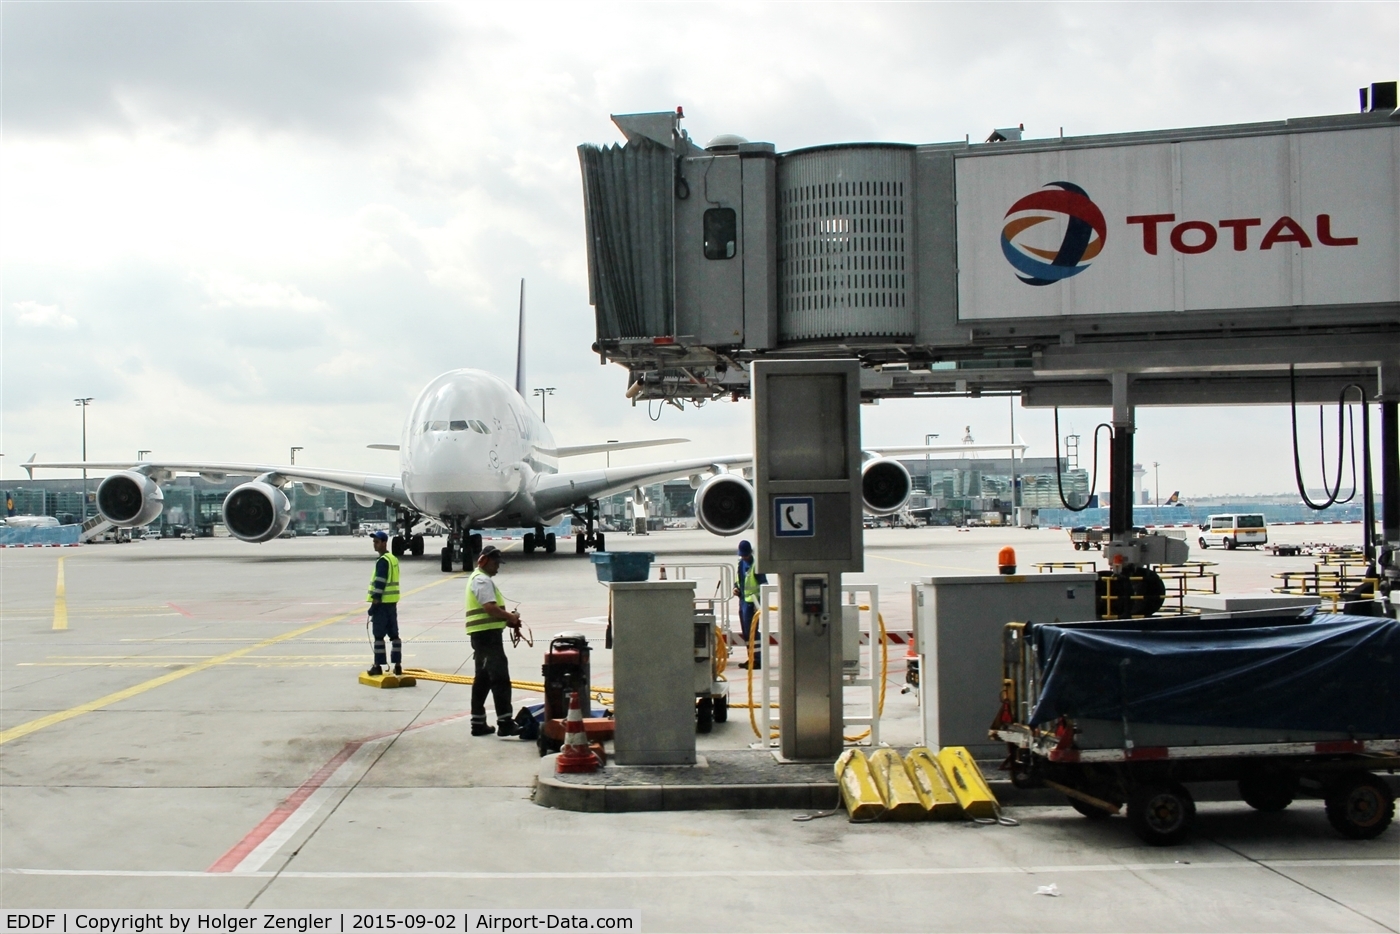 Frankfurt International Airport, Frankfurt am Main Germany (EDDF) - What does a wide body need? BP? Shell? 